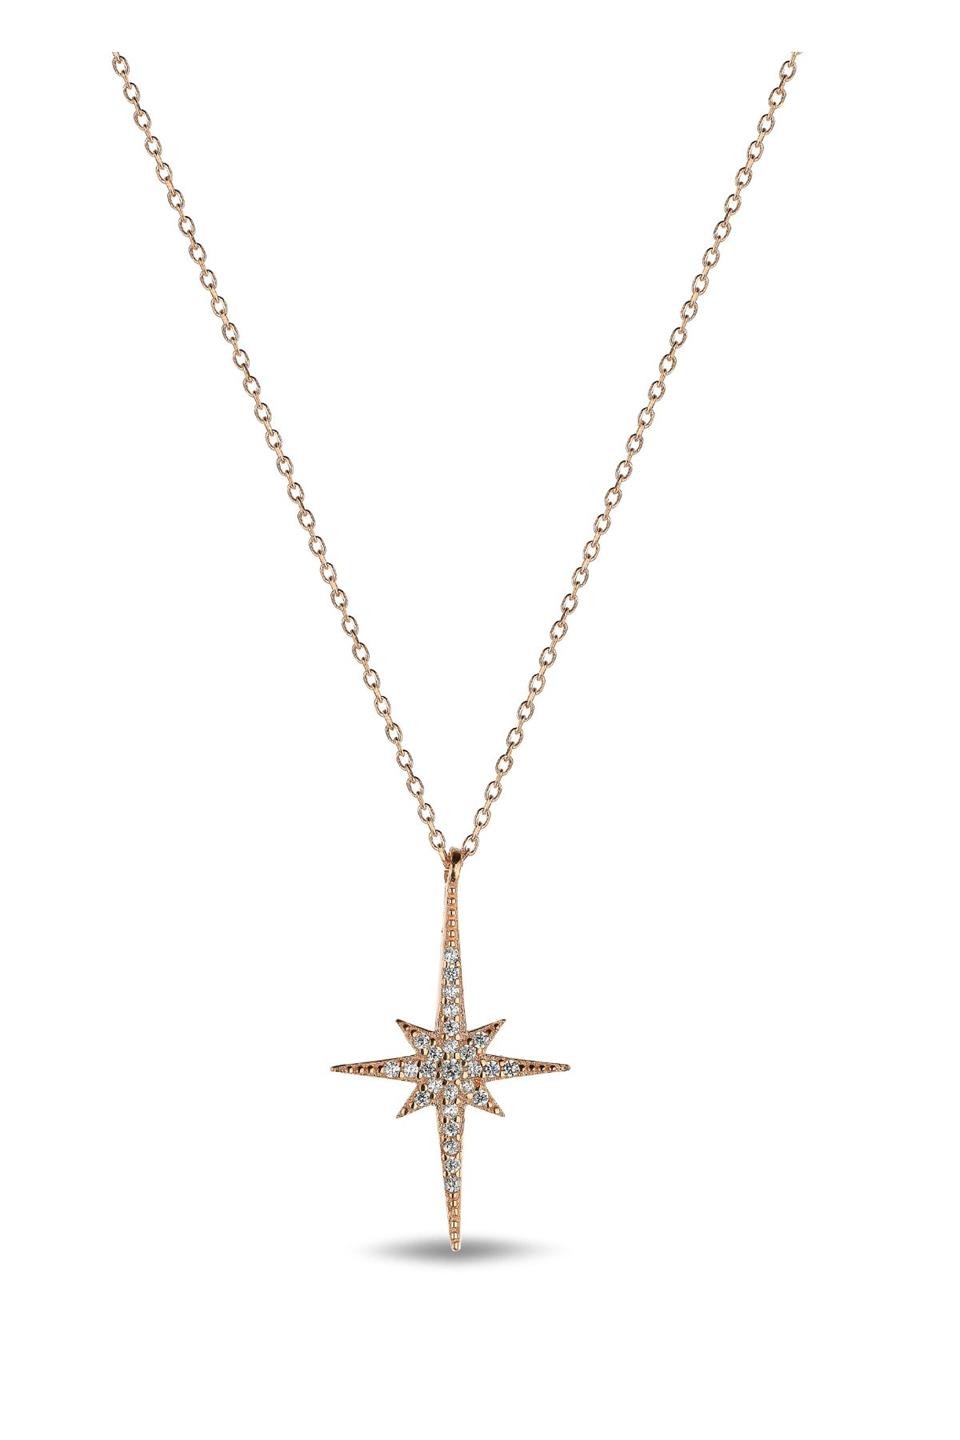 Polar star necklace